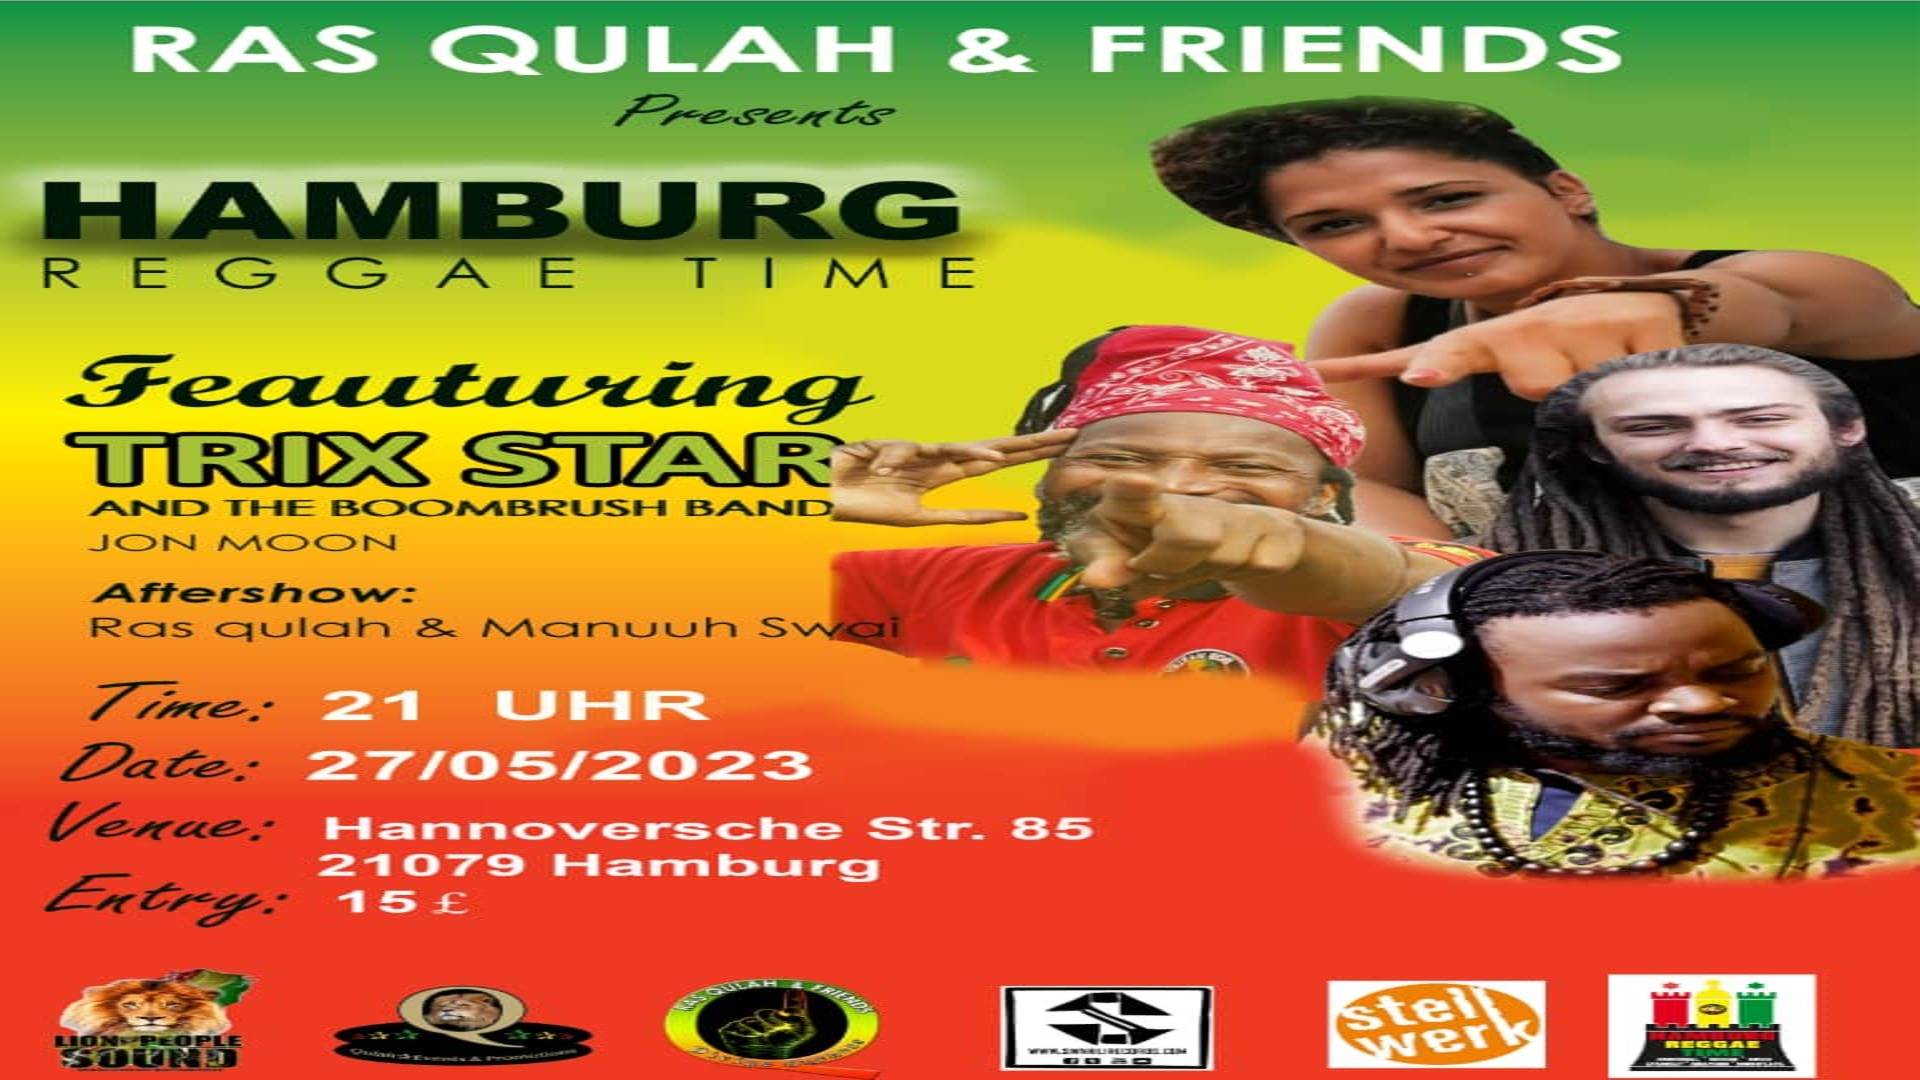 reggae3 85646 Hamburg Reggae Time ft.TrixStar and BOOMBRUSH Band